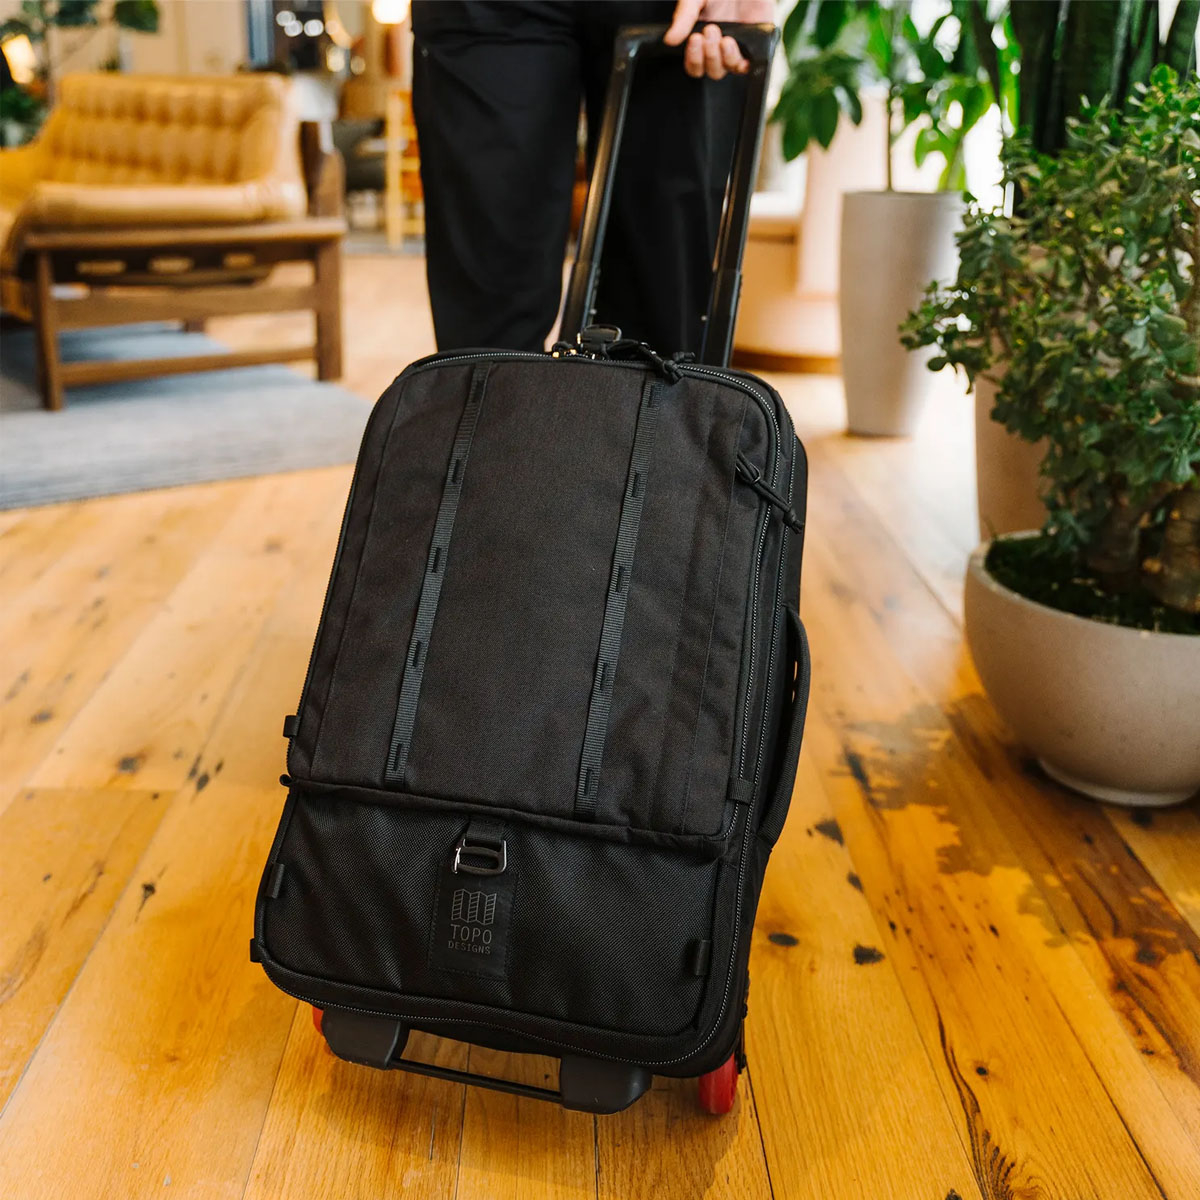 Global Travel Bag Rolling Luggage 44L